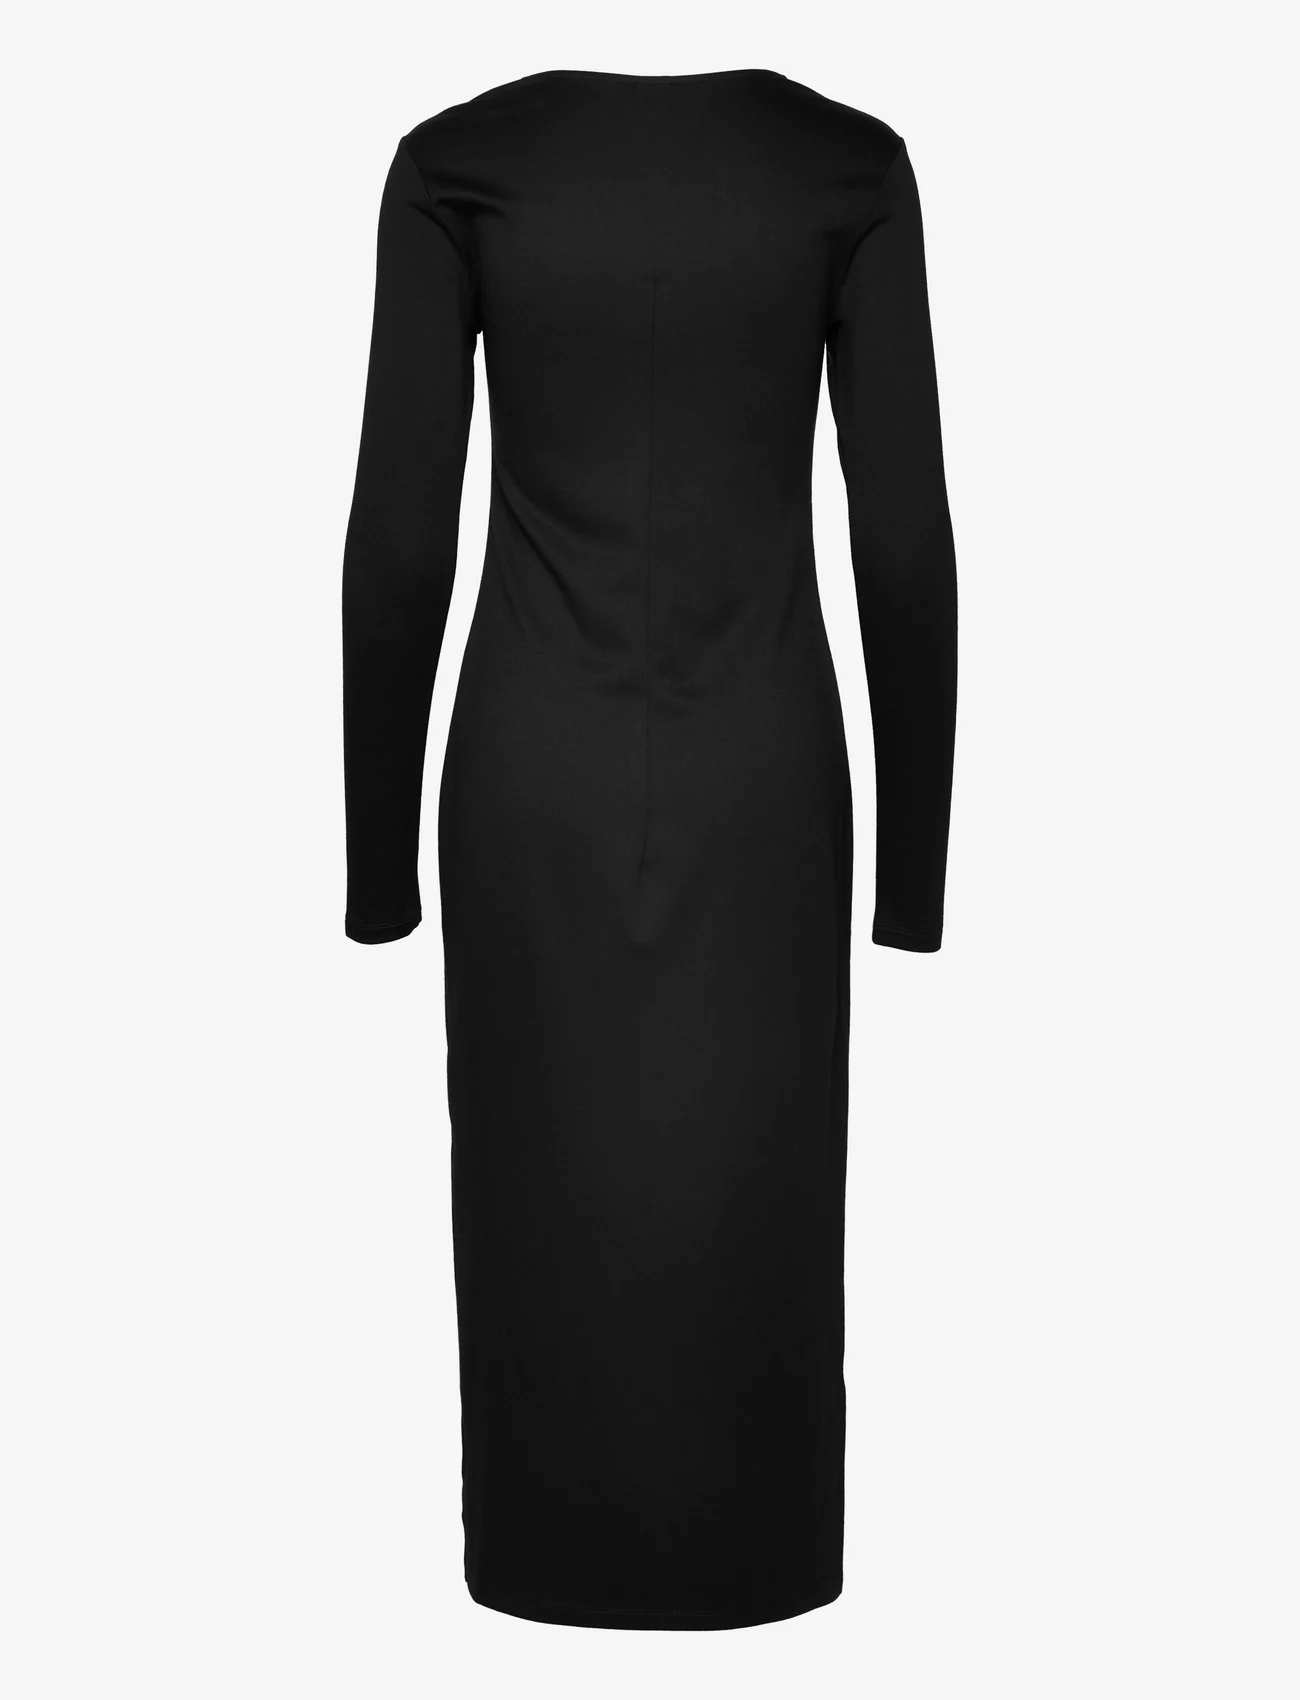 Twist & Tango - Amirah Dress - stramme kjoler - black - 1